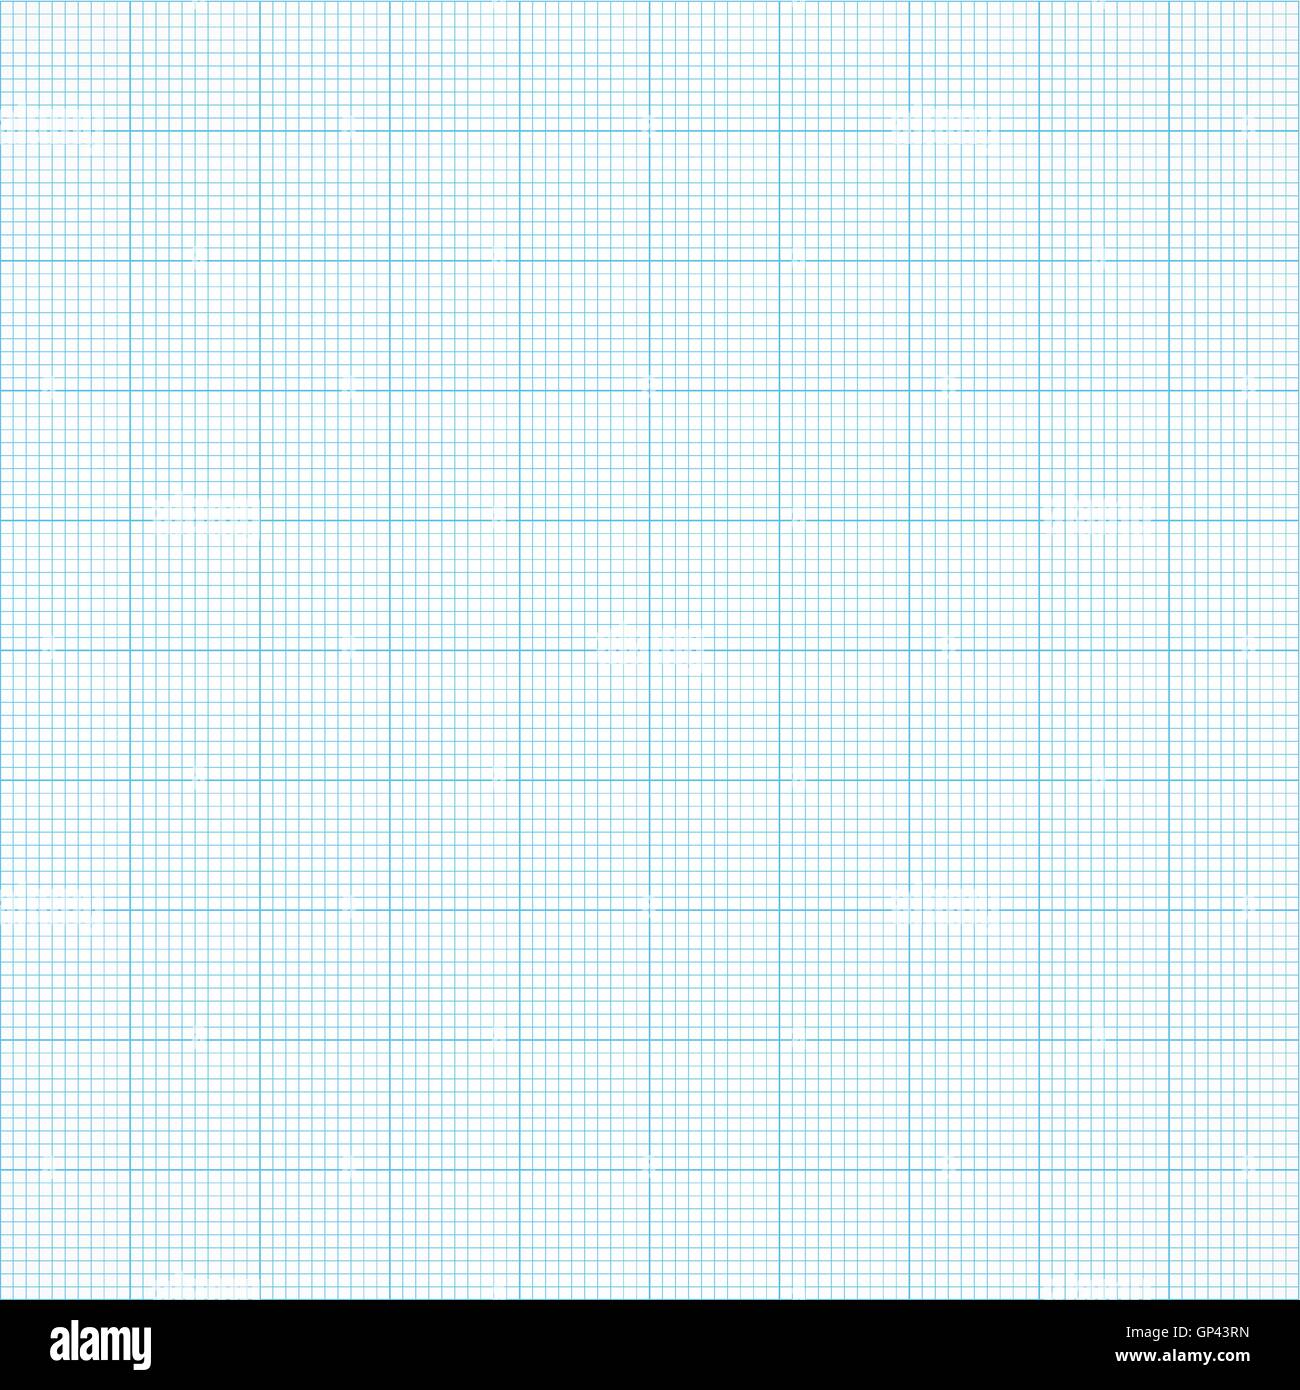 Blueprint Paper Hd Background Stock Illustration - Download Image